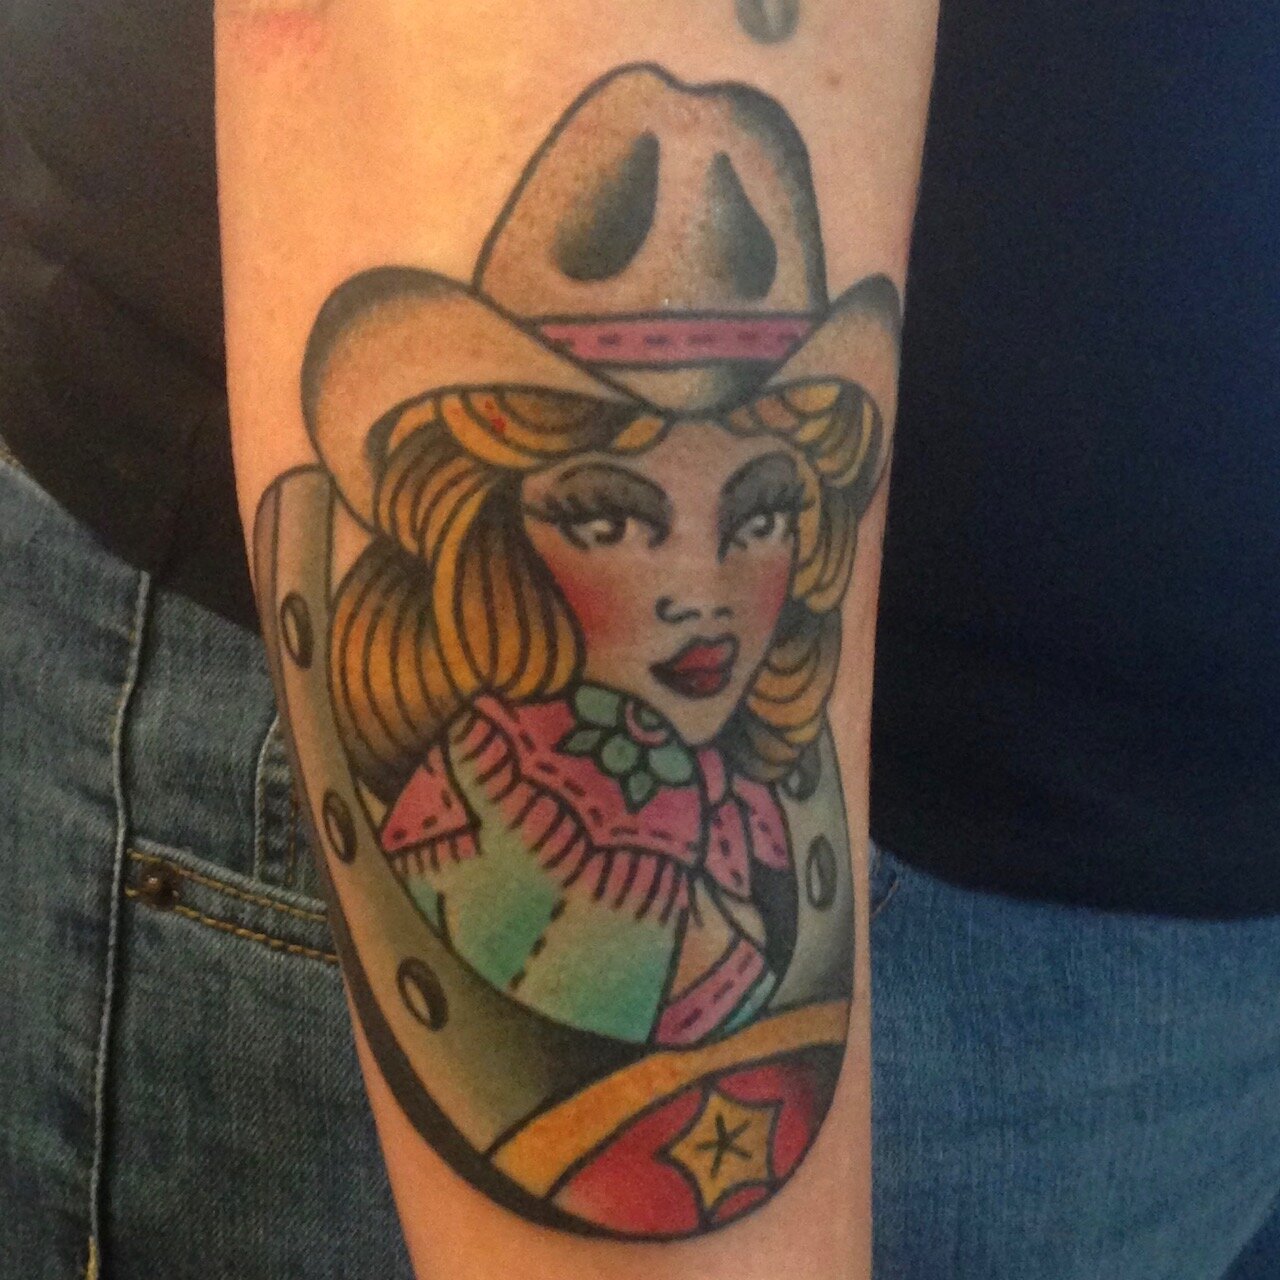 Western woman tattoo with horseshoe by Josh Hanes at Southern Star Tattoo in Atlanta, Georgia